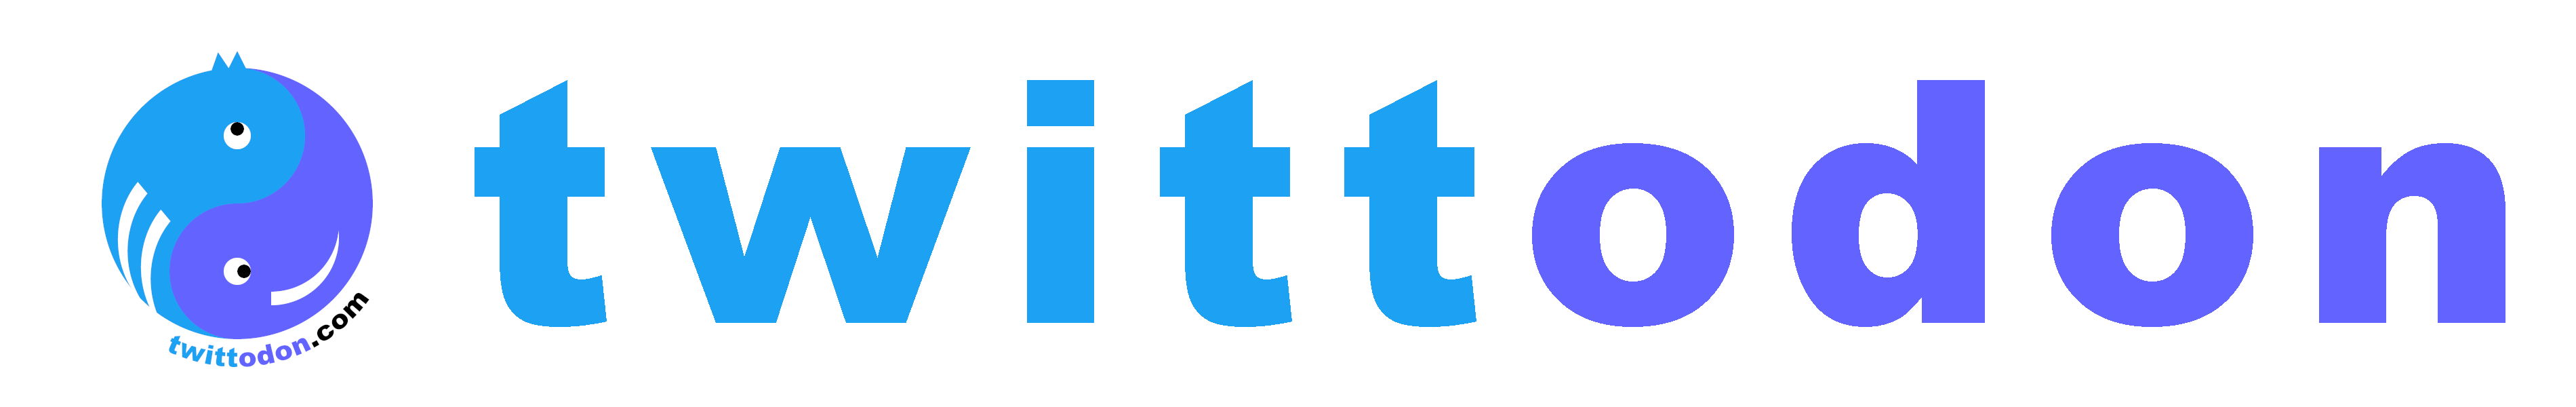 Twittodon.com logo